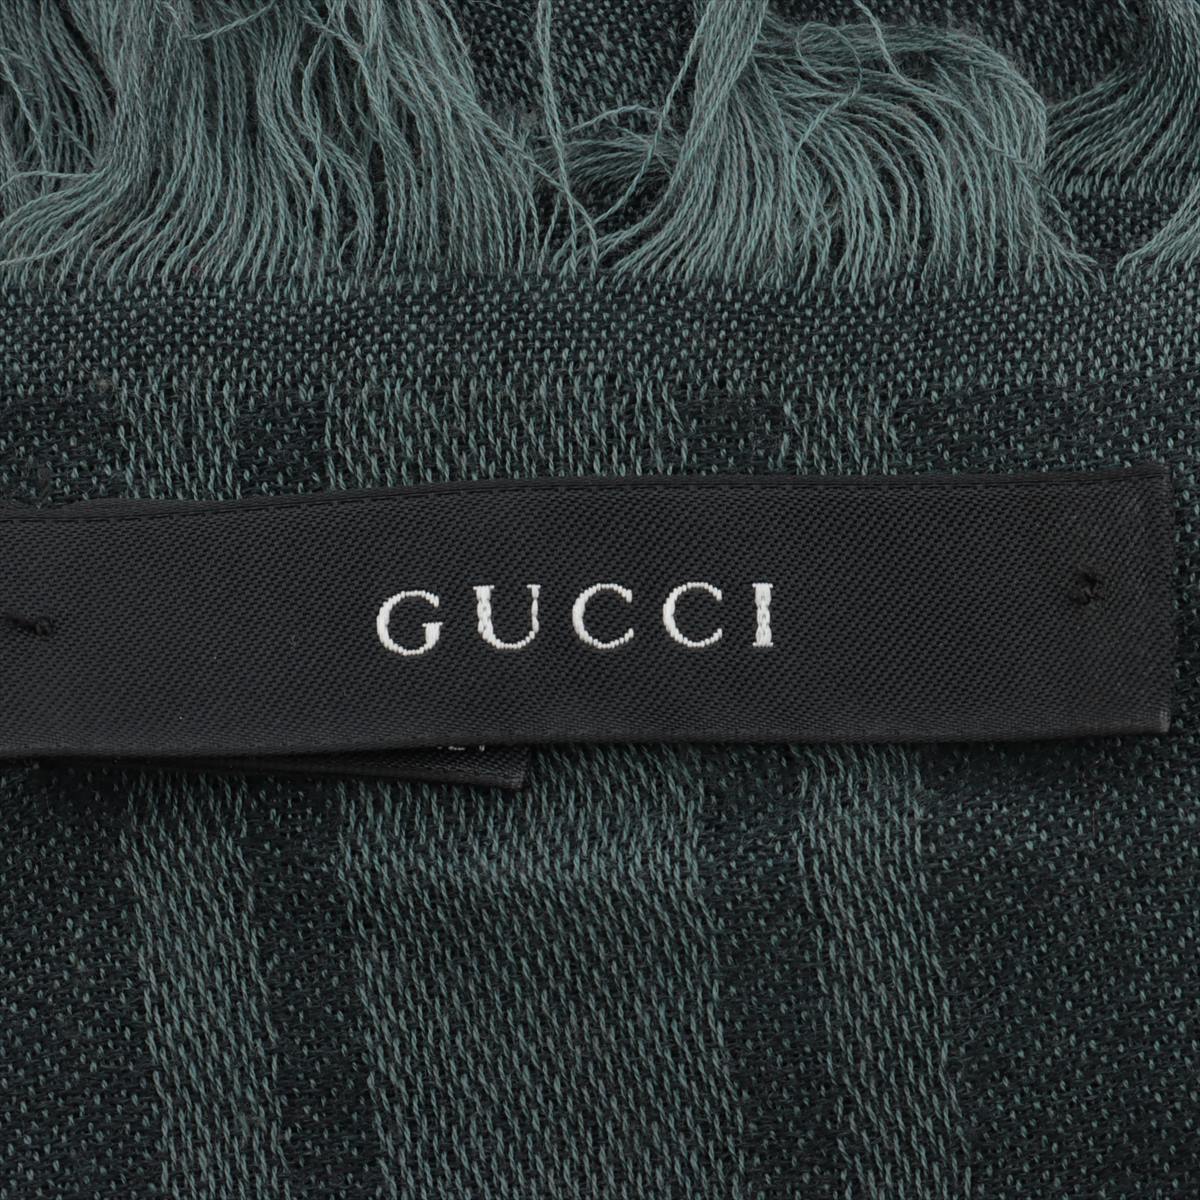 Gucci GG pattern Stole Cotton Black x Gray